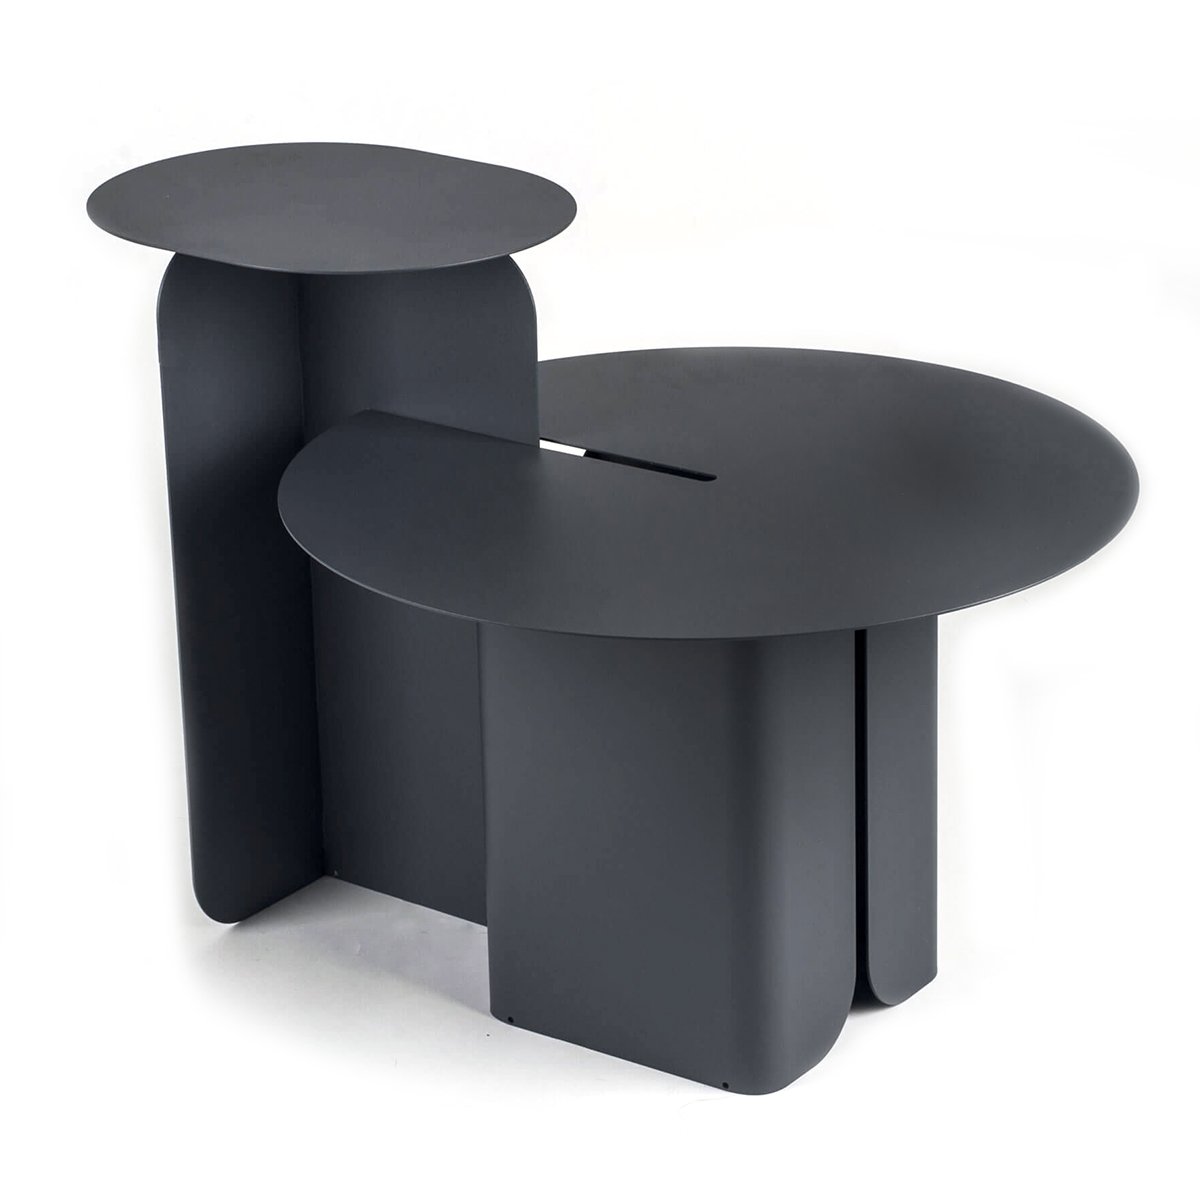 HIP HOP side tables - set of 2 pieces